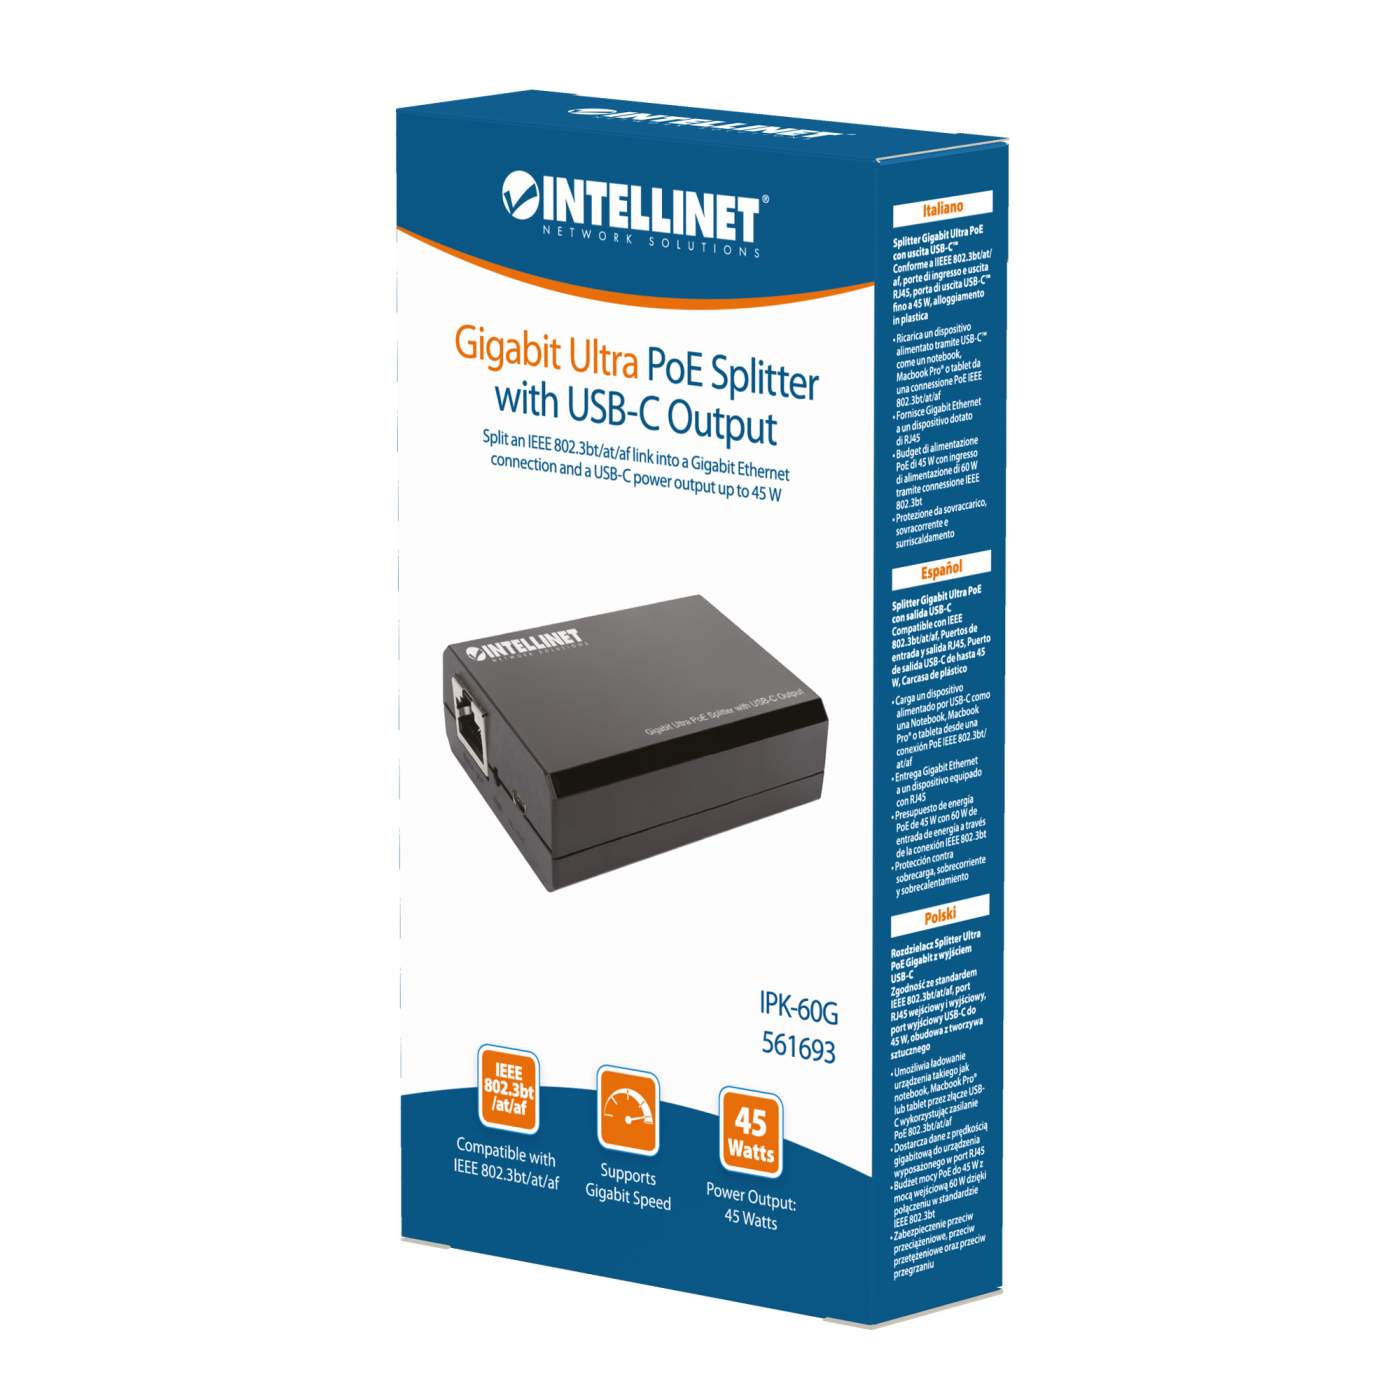 Gigabit Ultra PoE Splitter with USB-C Output Packaging Image 2